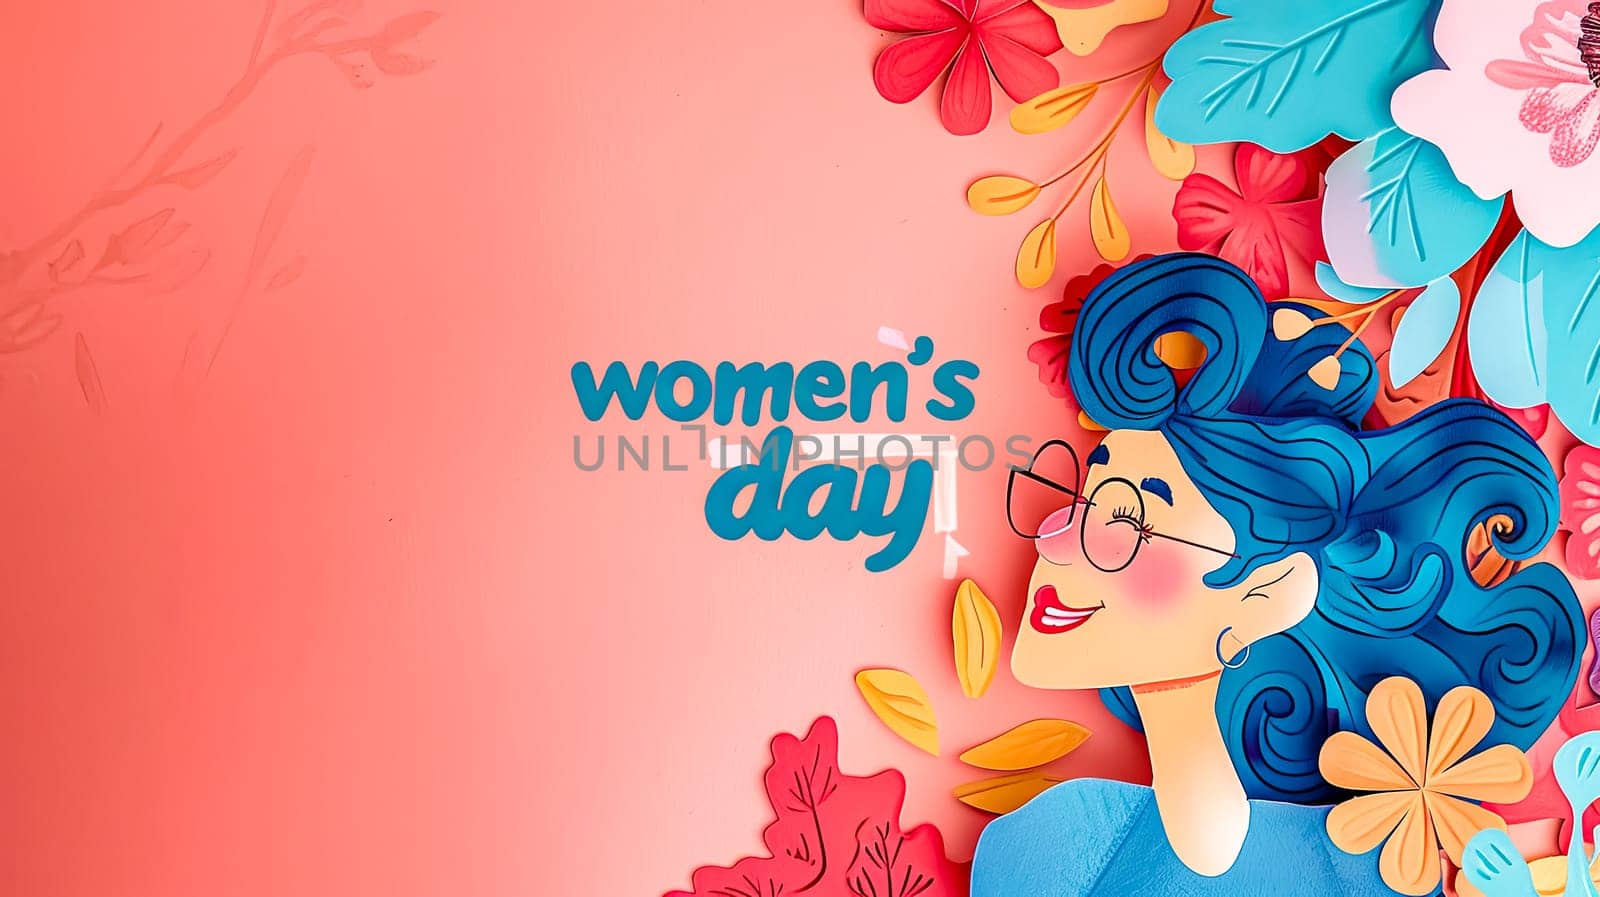 International women's day creative illustration by Edophoto